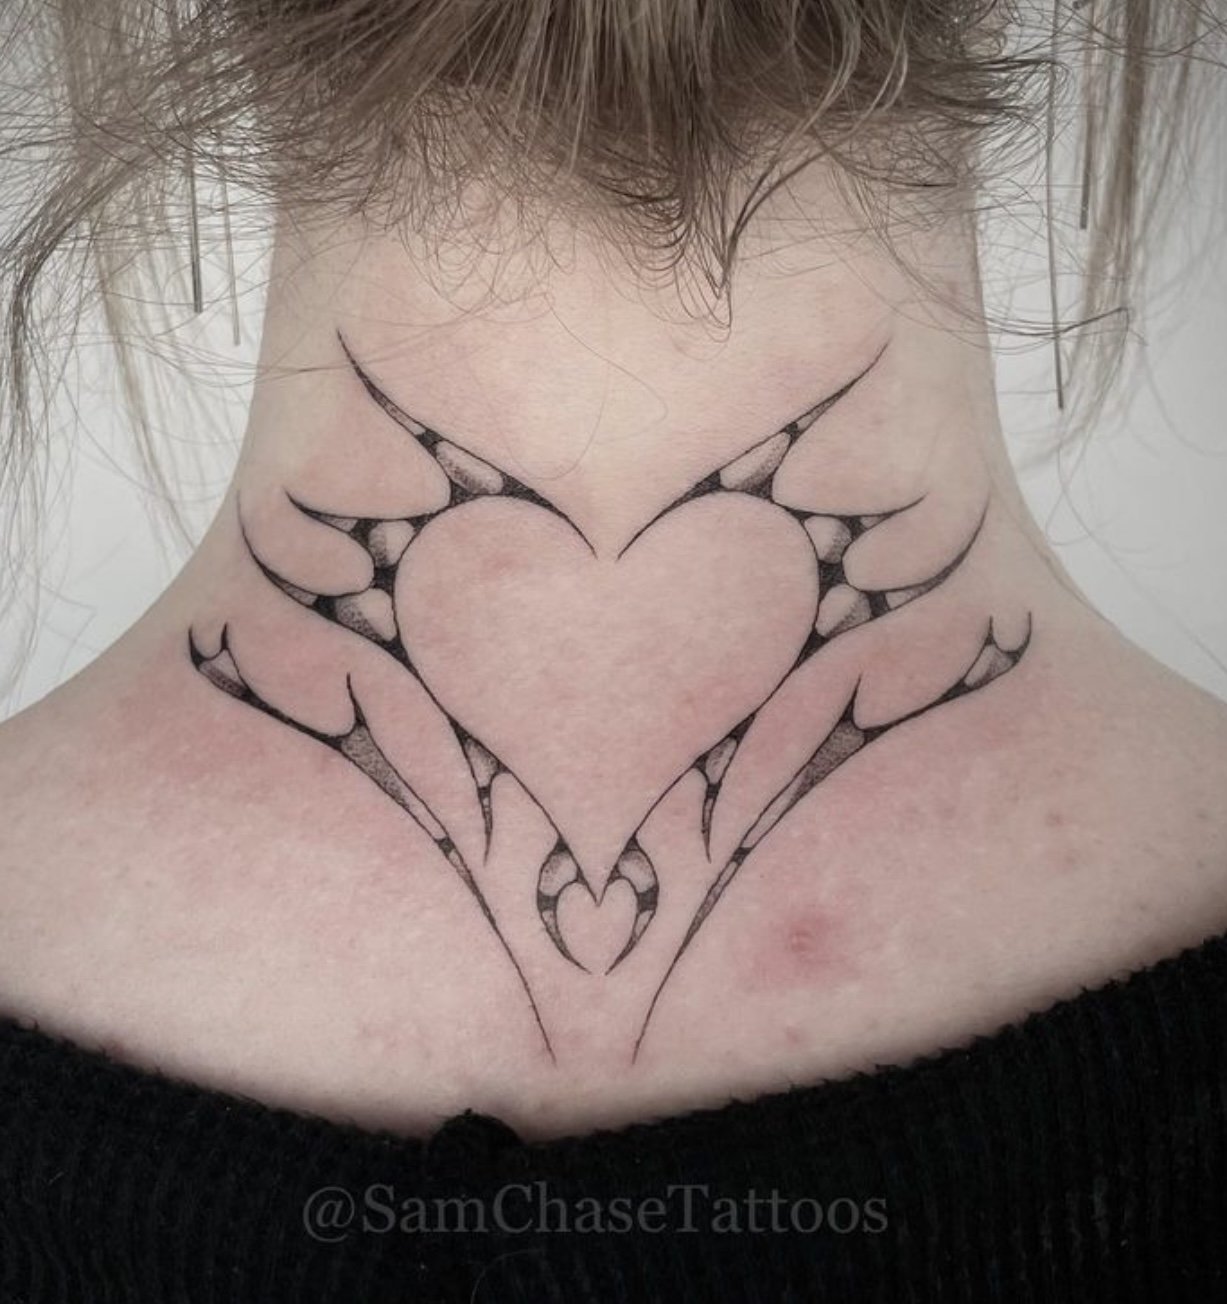 Sam's Tattoo & Body Piercing Studio – Coalville, Leicester Tattoo